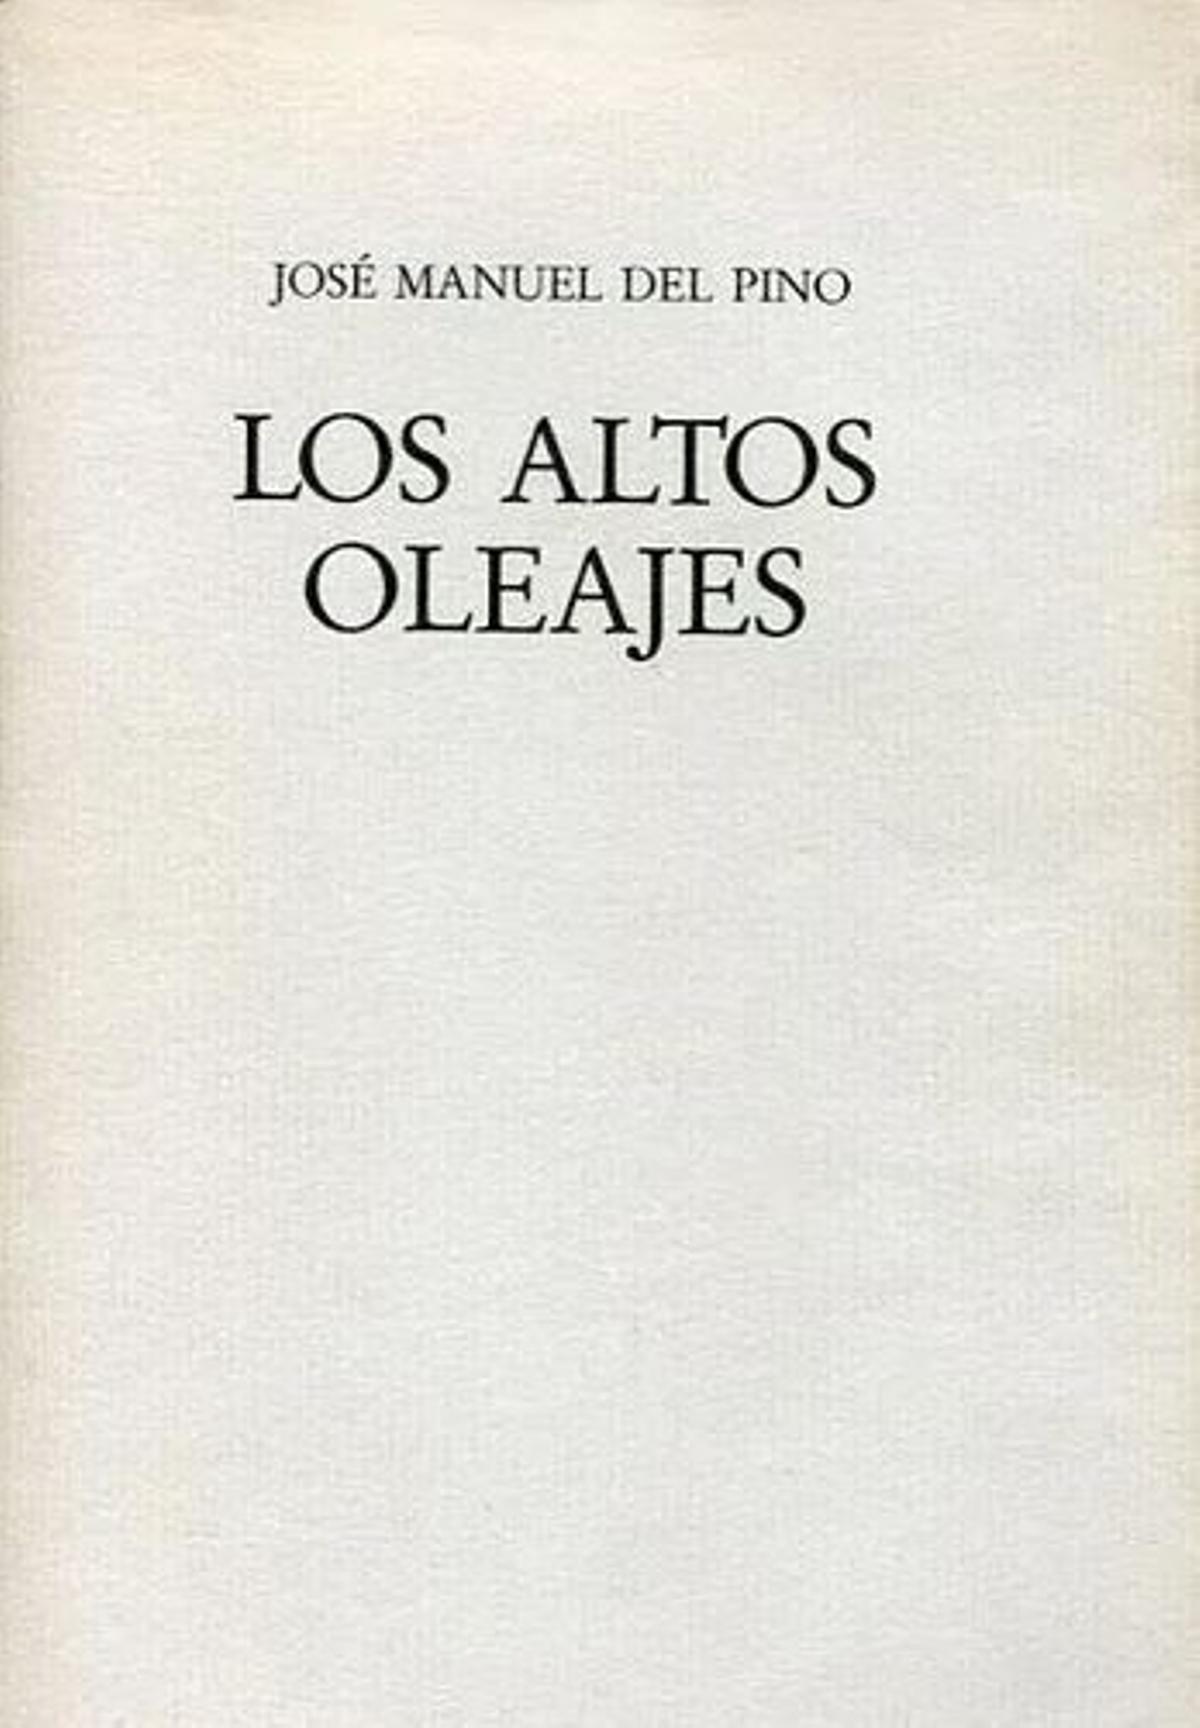 Portada de la obra, publicada en Antequera en 1988.